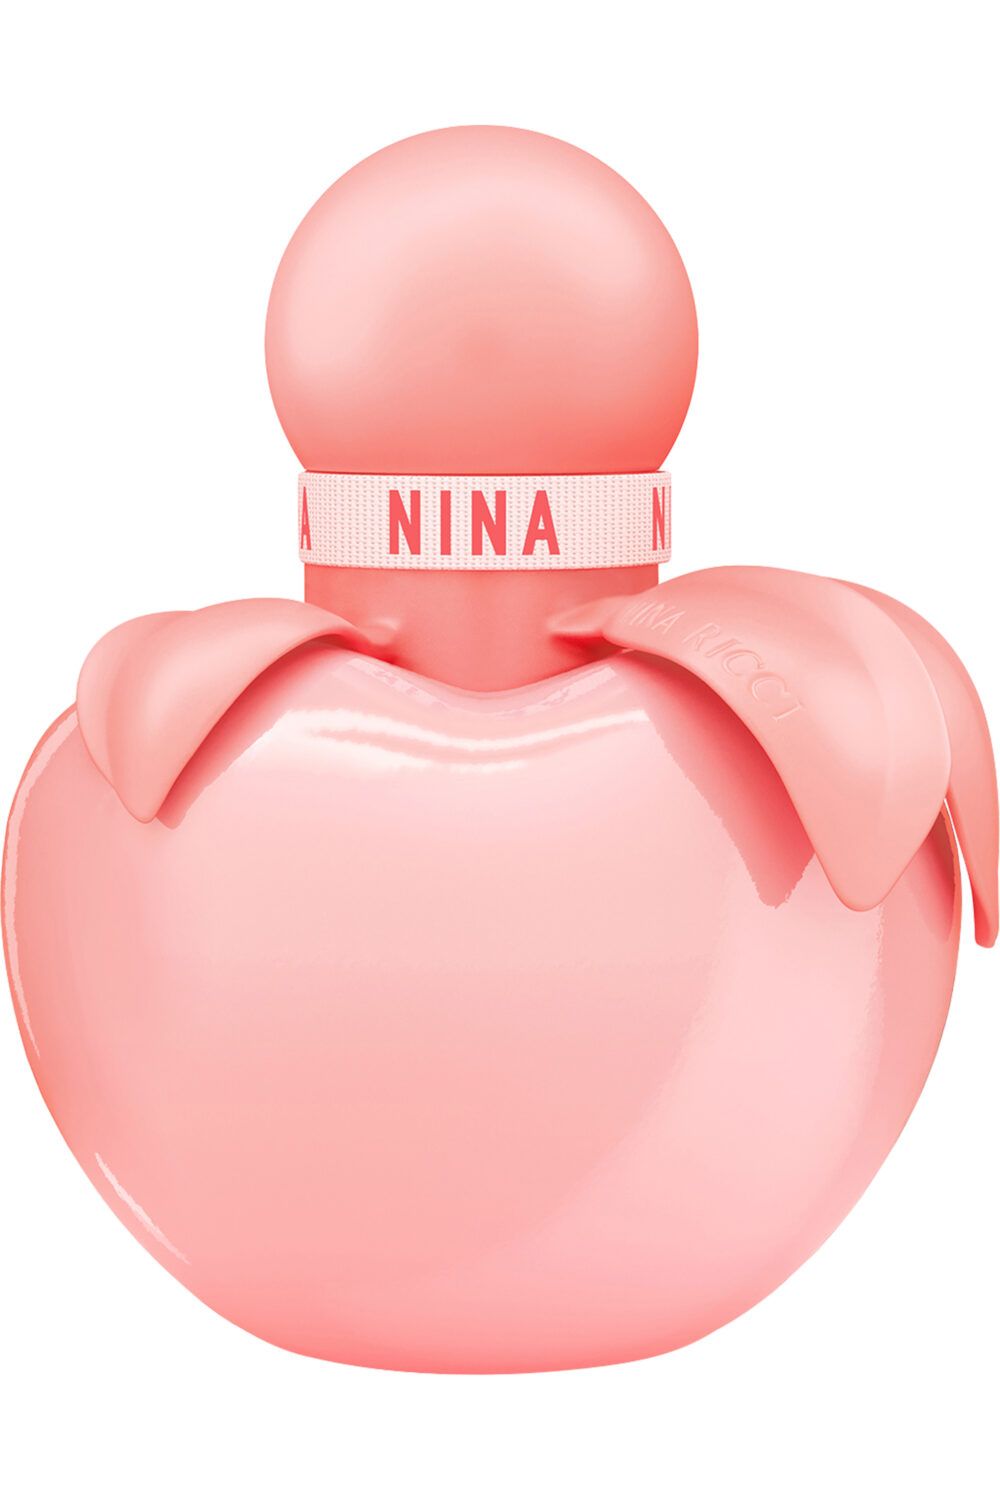 Nina Ricci - Nina Rose Eau de Toilette 30ml